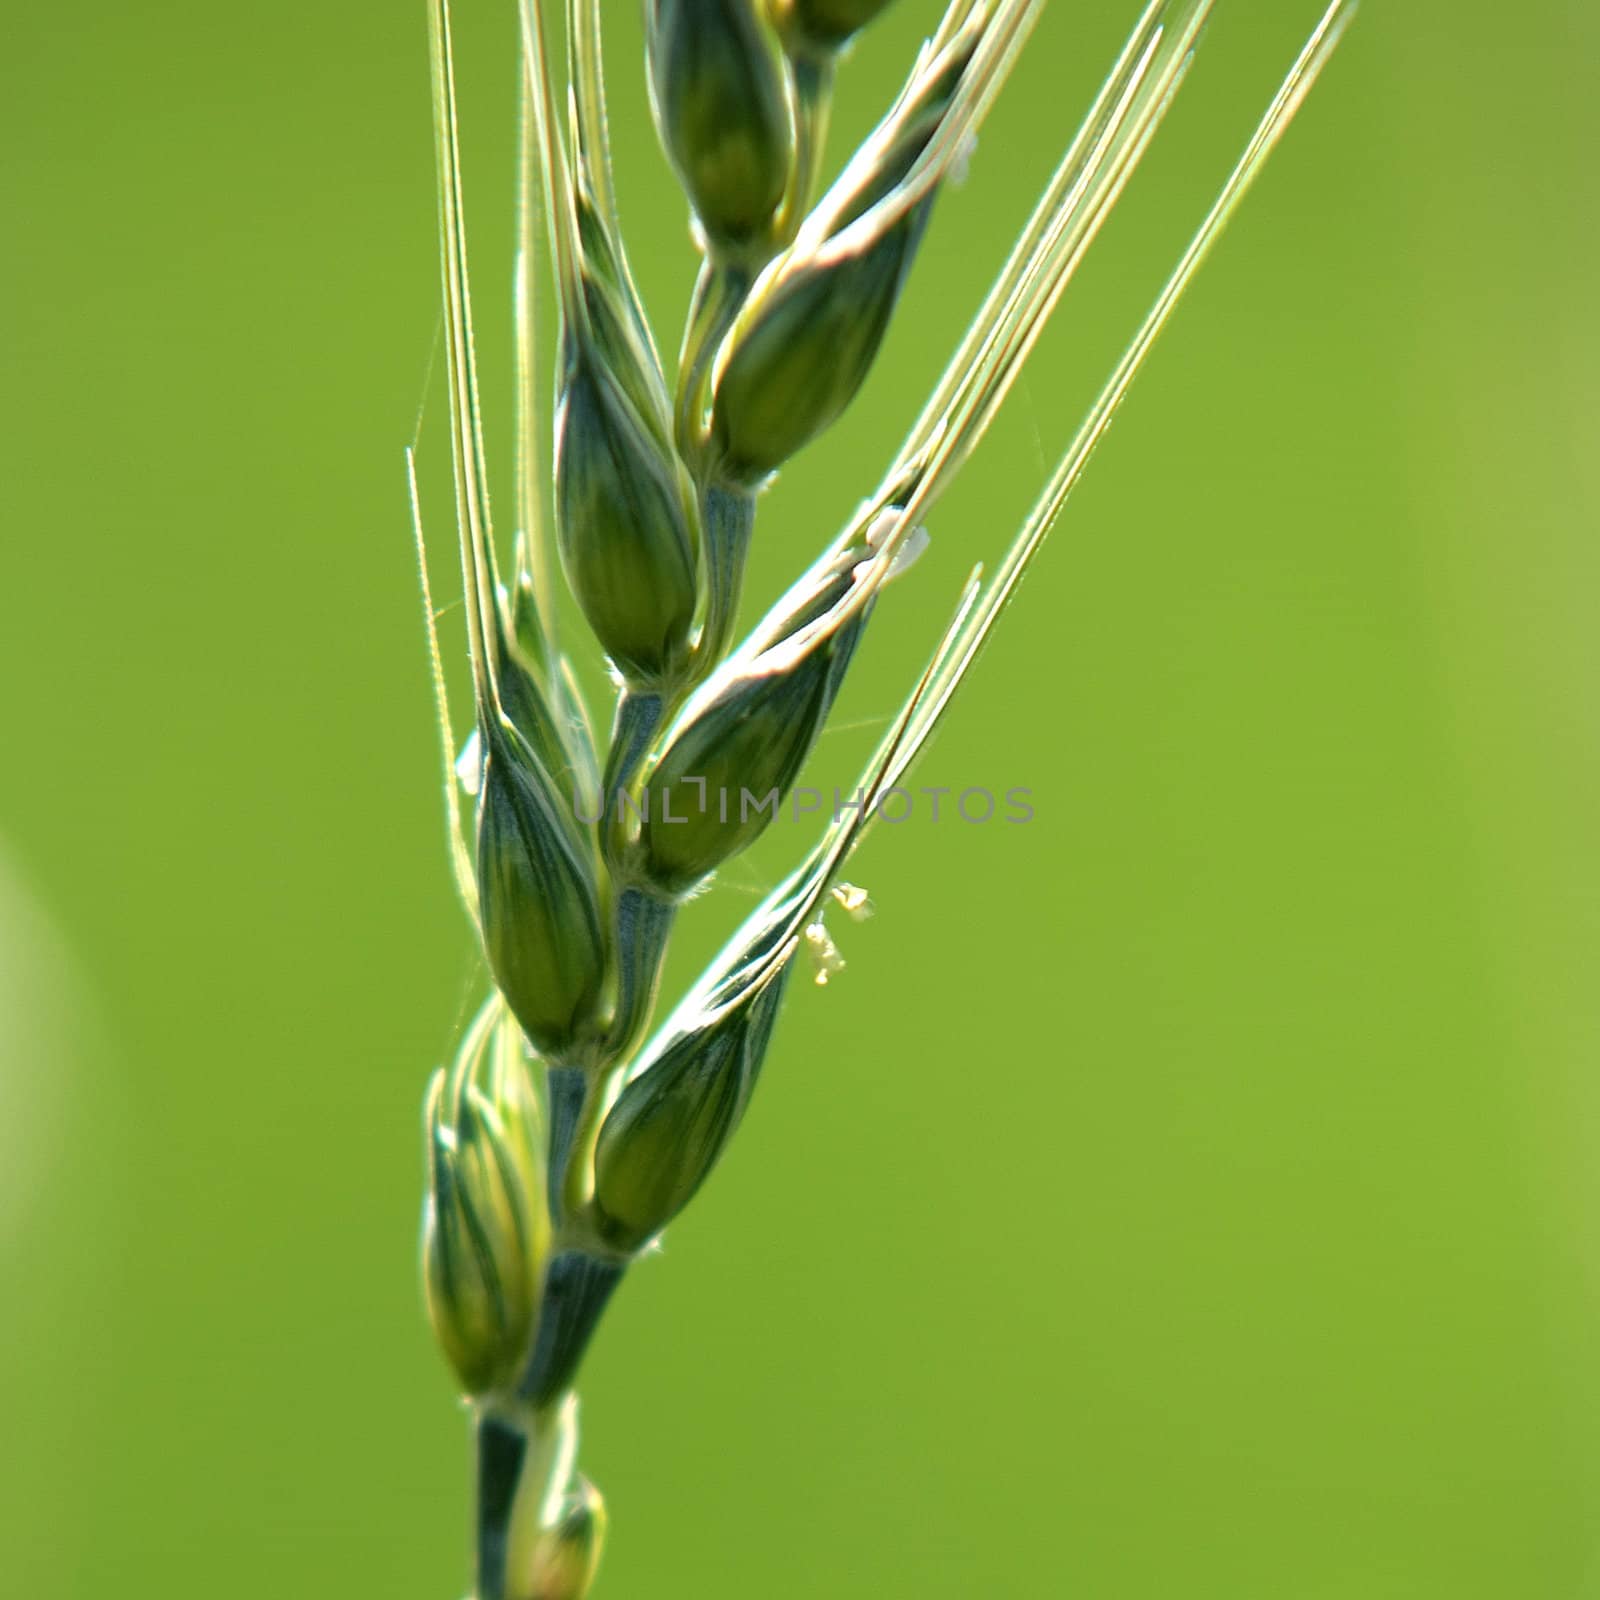 green wheat background